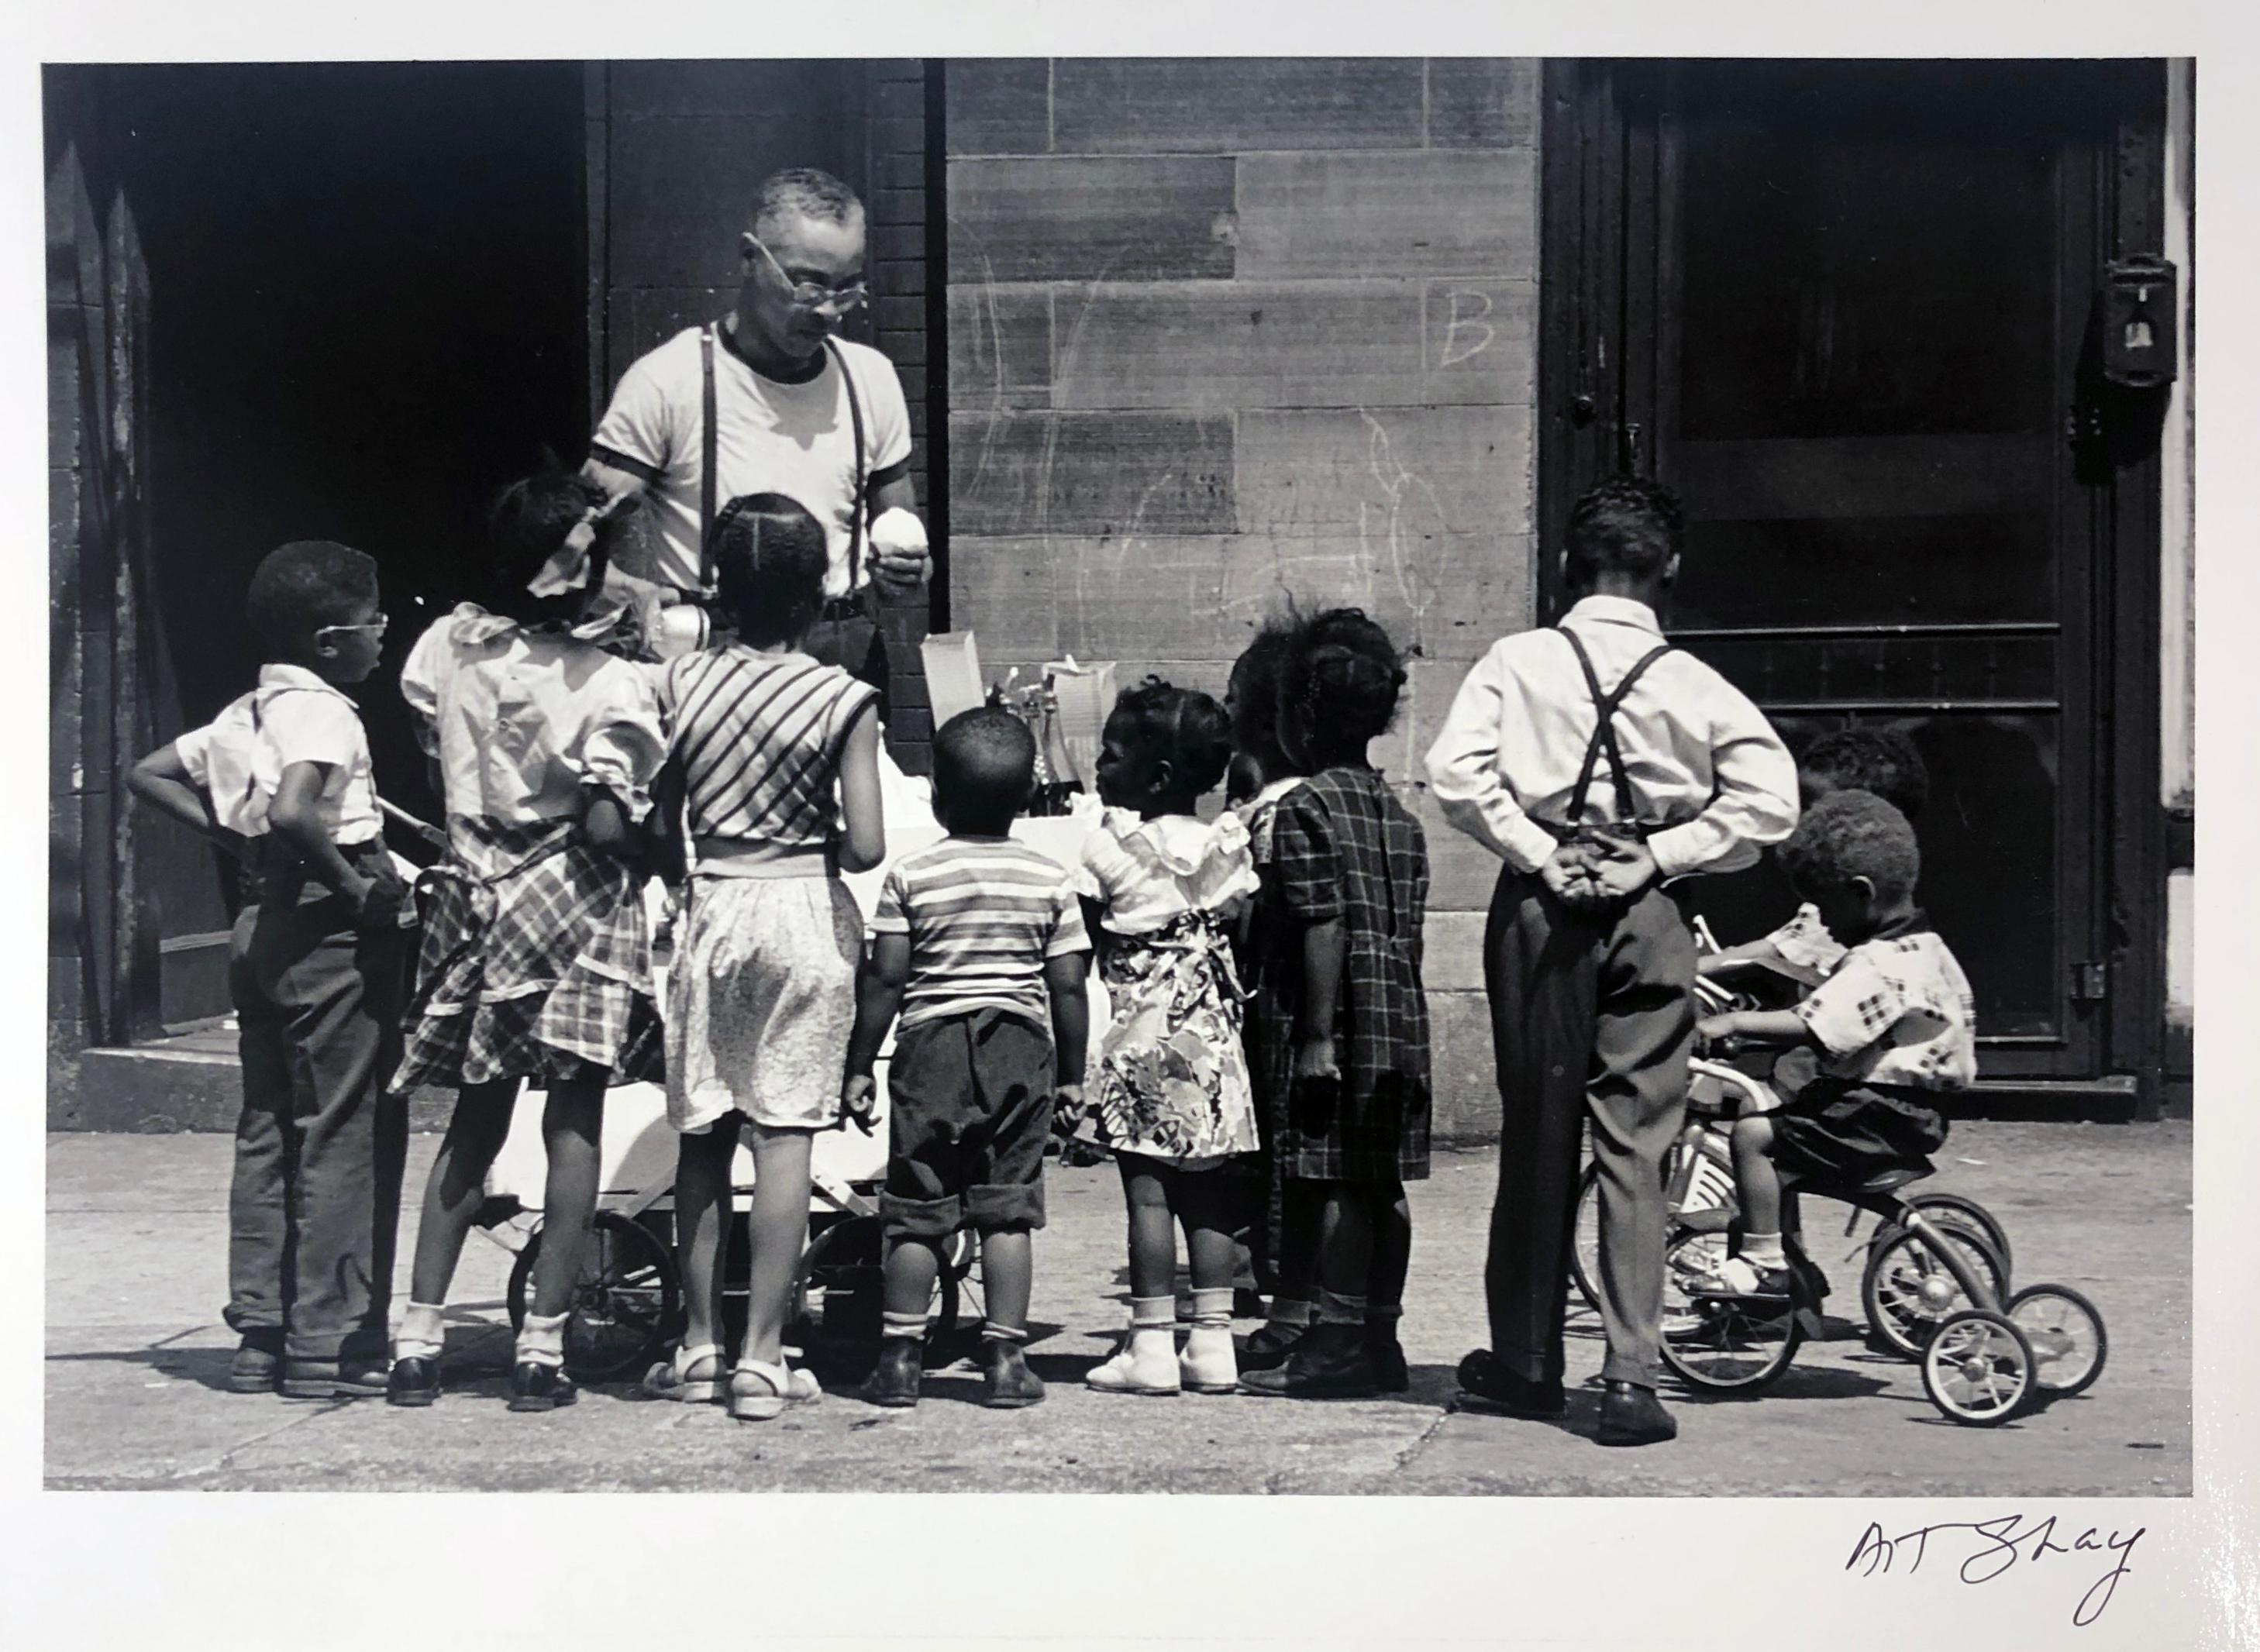 Art Shay Color Photograph – Iceman - Children Gathered Around an Ice Cream Vendor, um 1949, Foto signiert